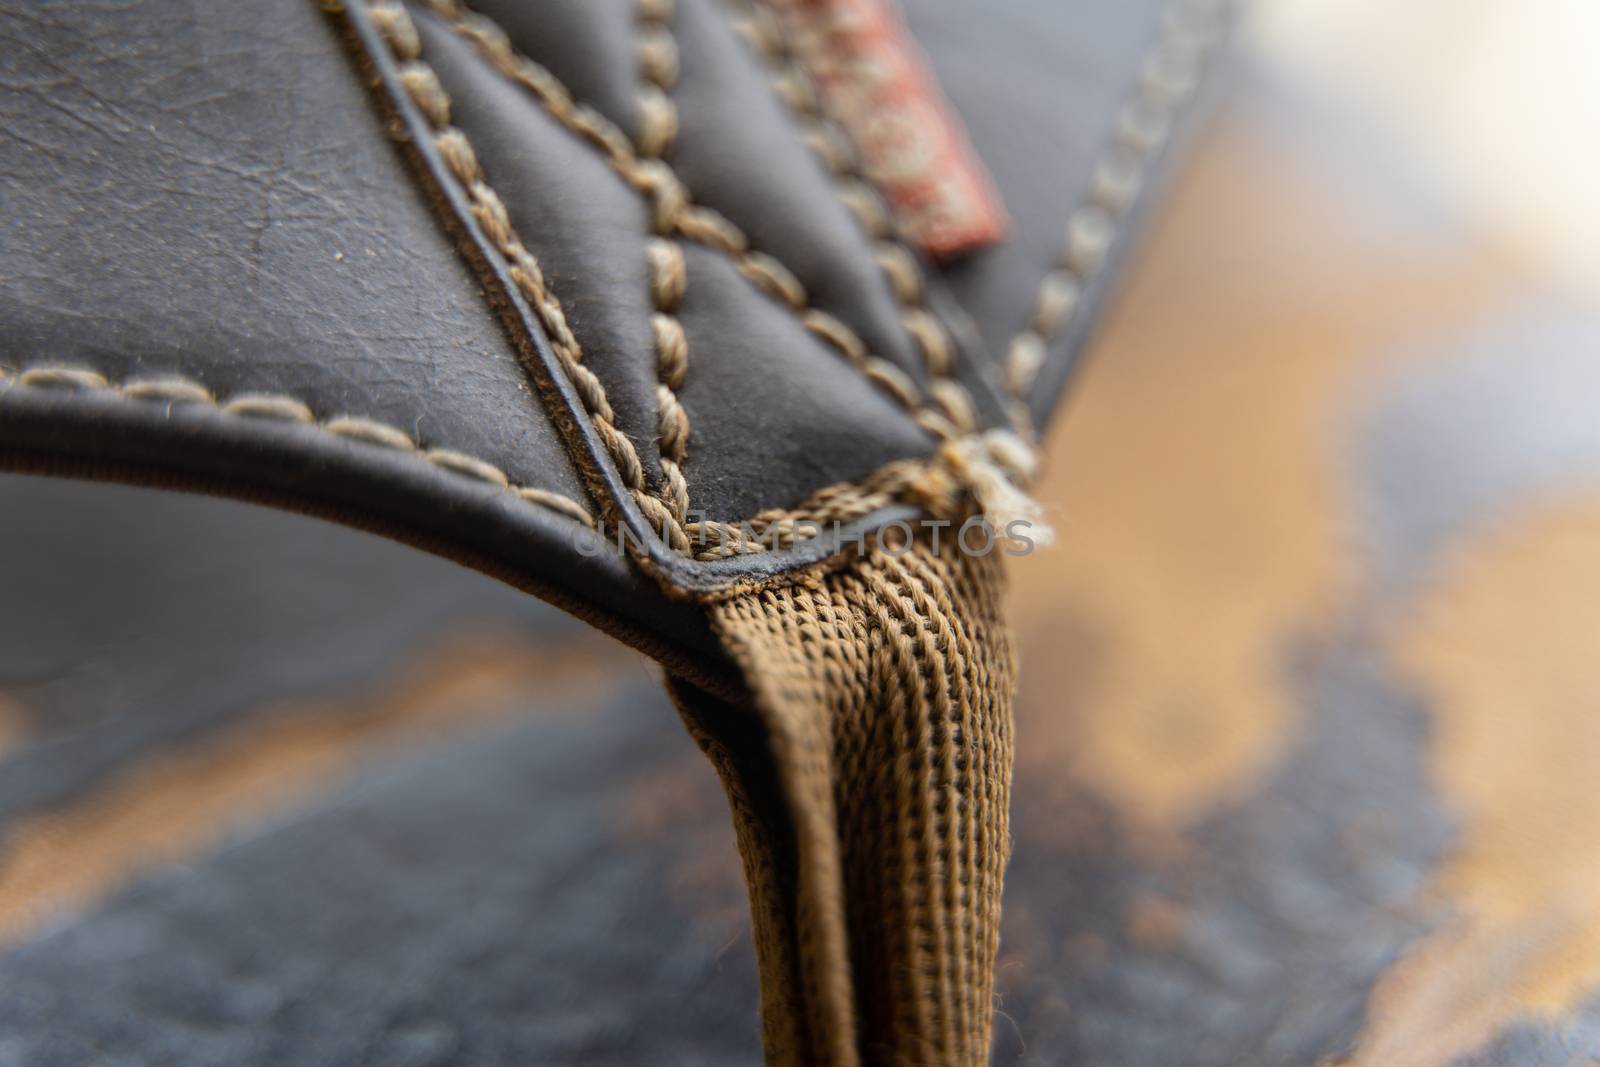 Closeup of sandal. blur background by peerapixs